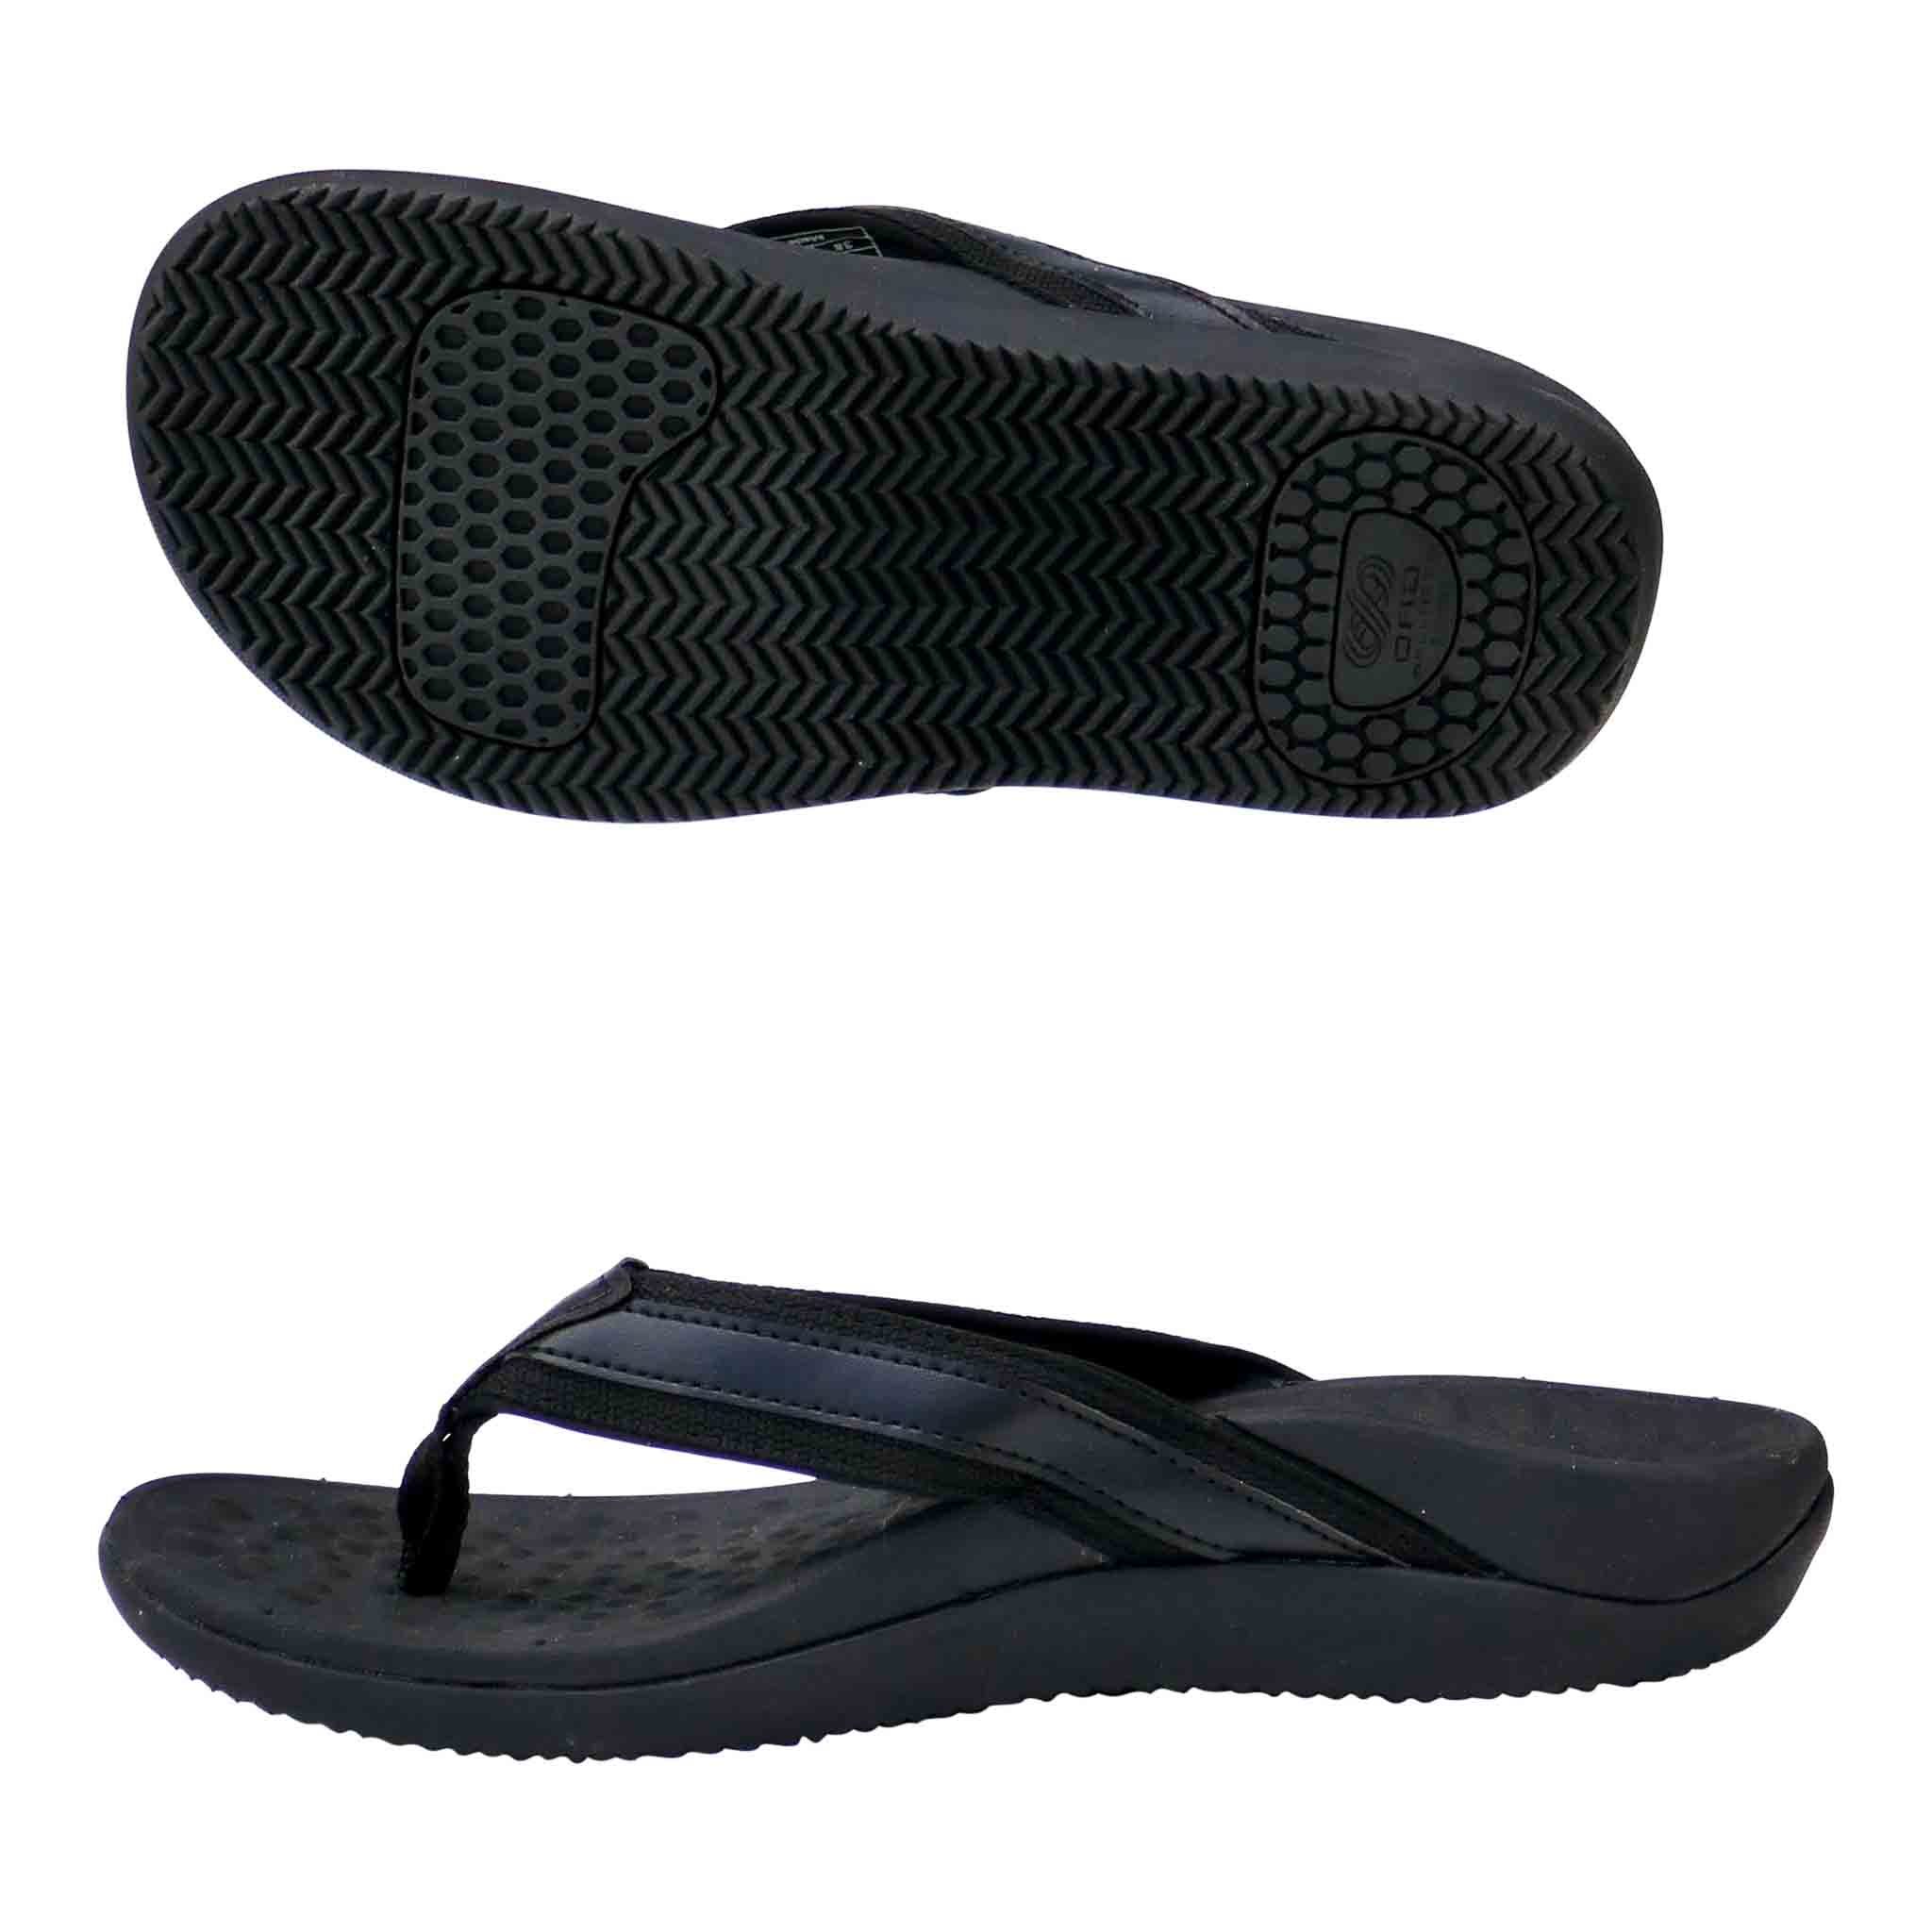 orthotic sandals